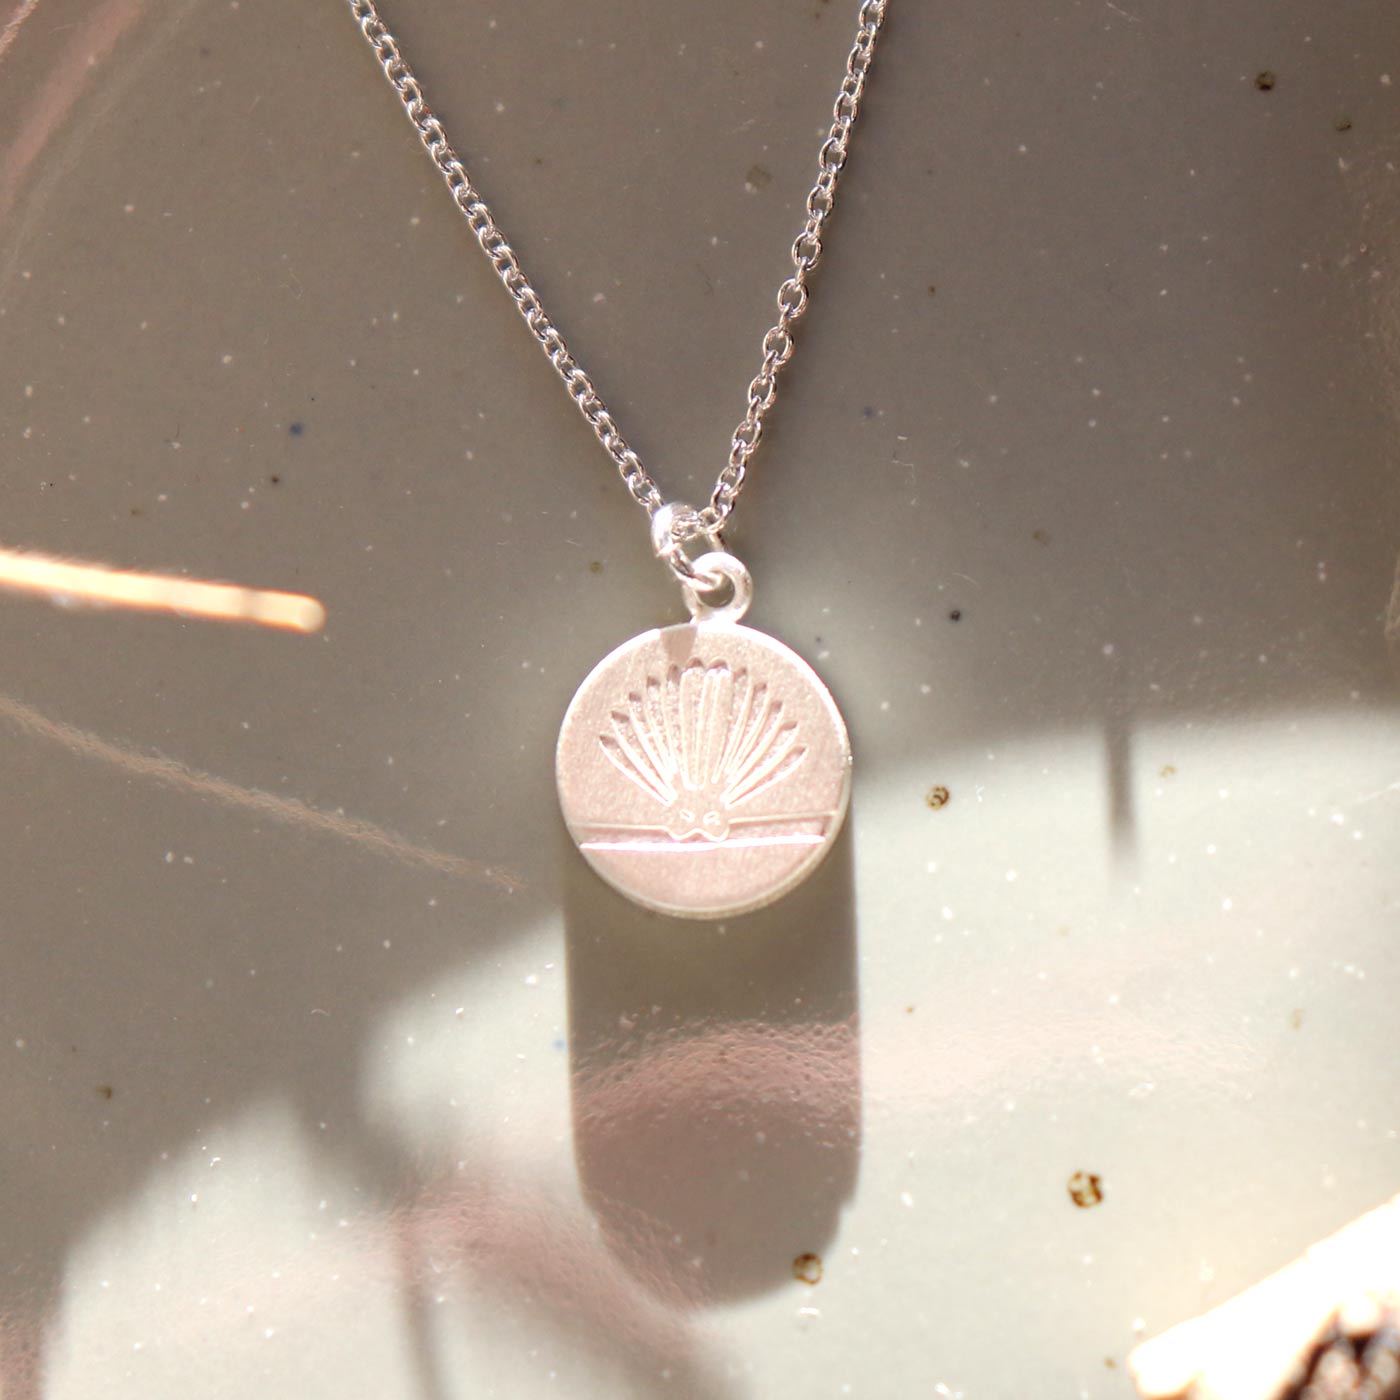 Keke Silver Playful piwakawaka fantail etched silver necklace NZ jewellery